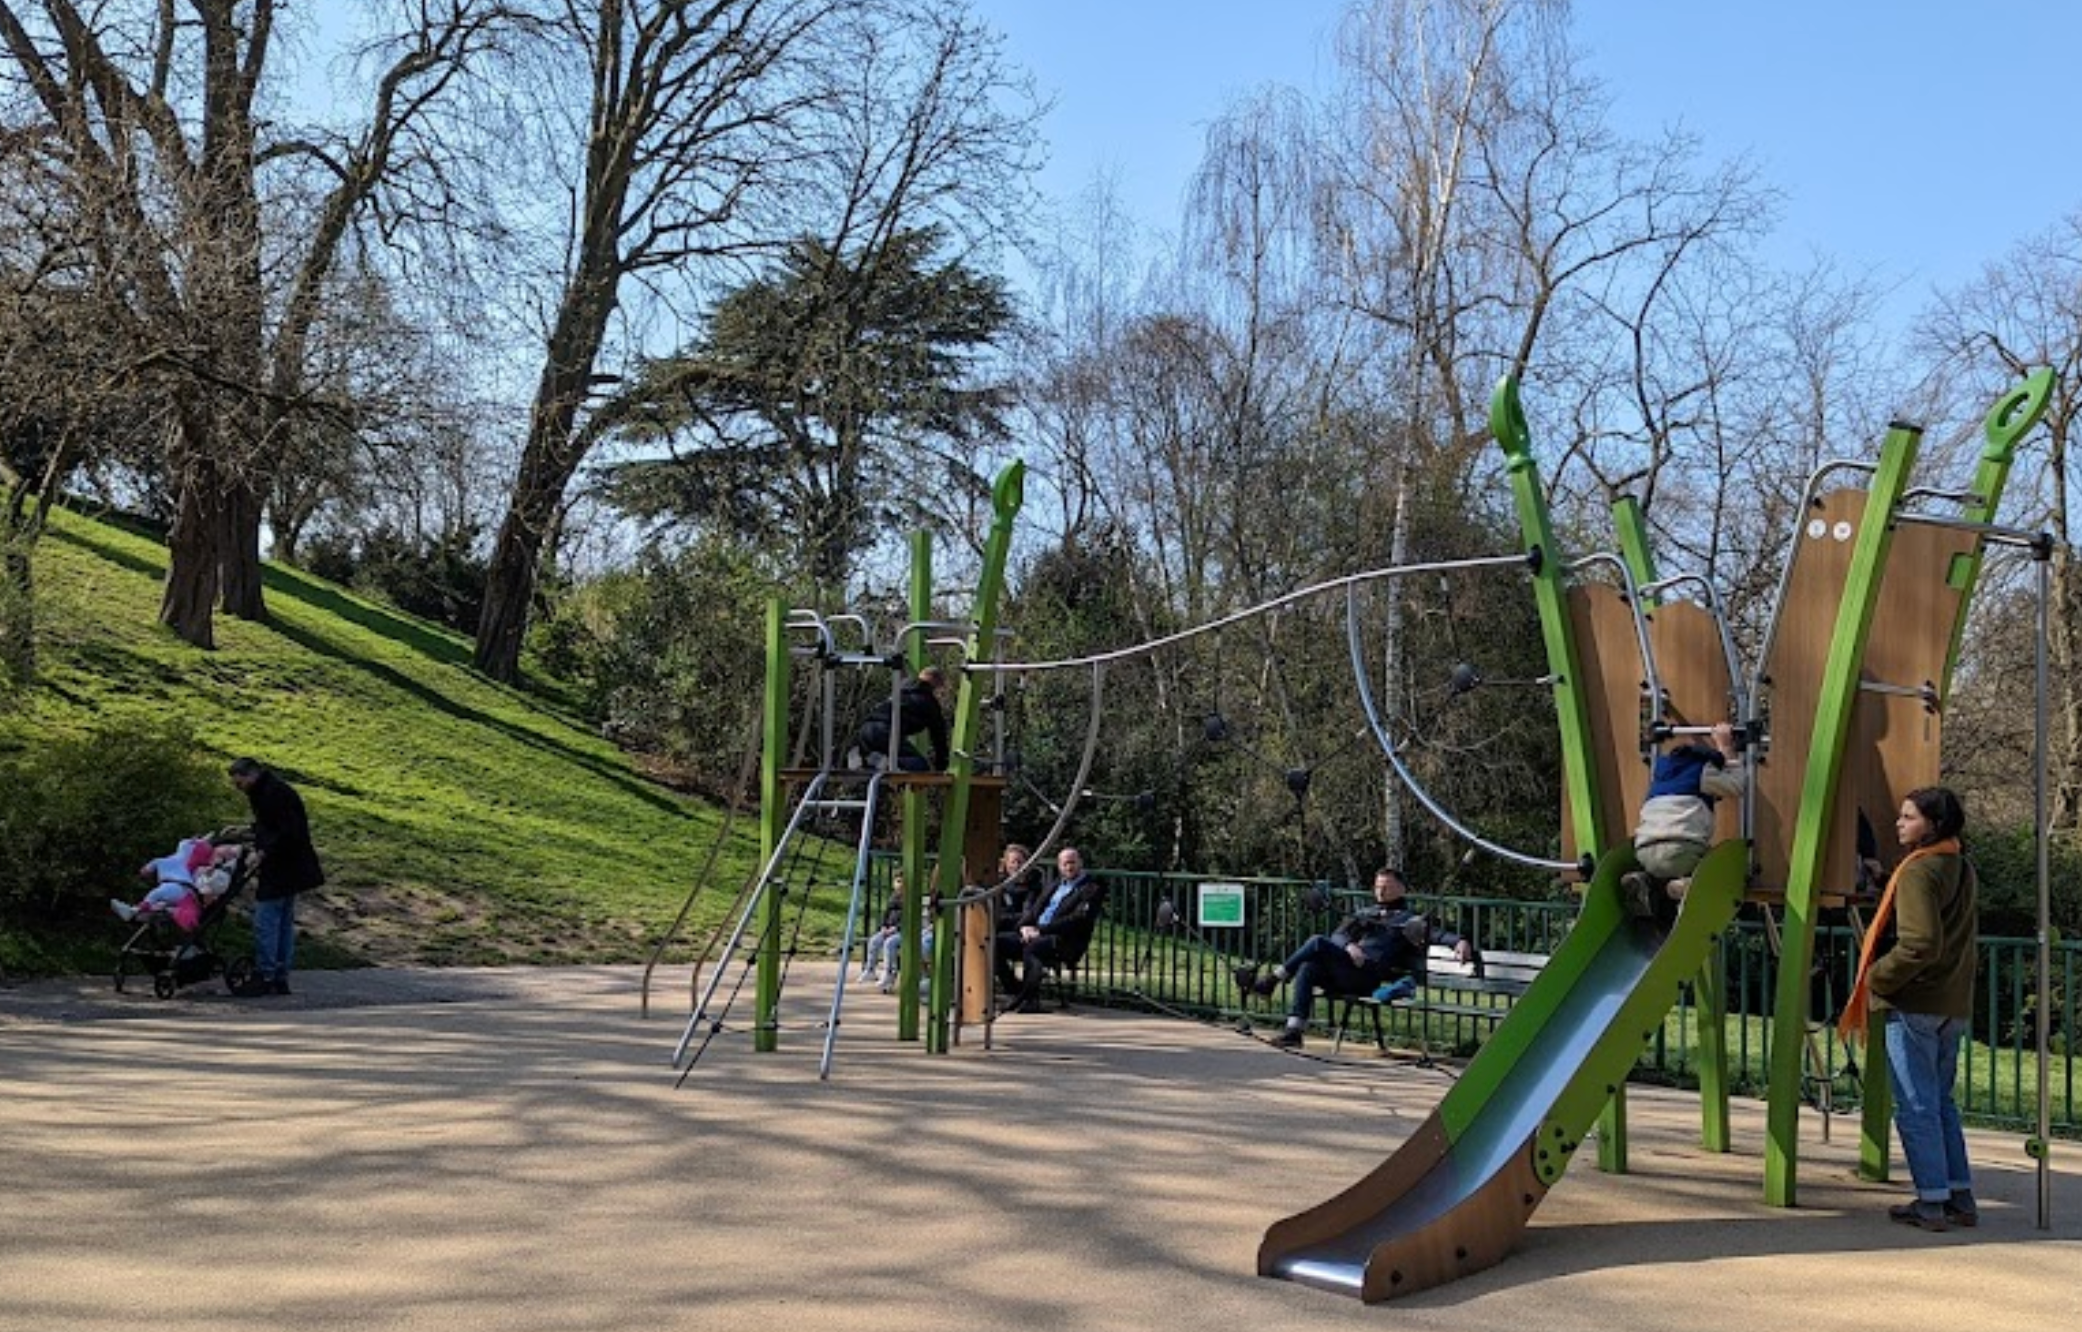 Playground in Parc des Buttes-Chaumont